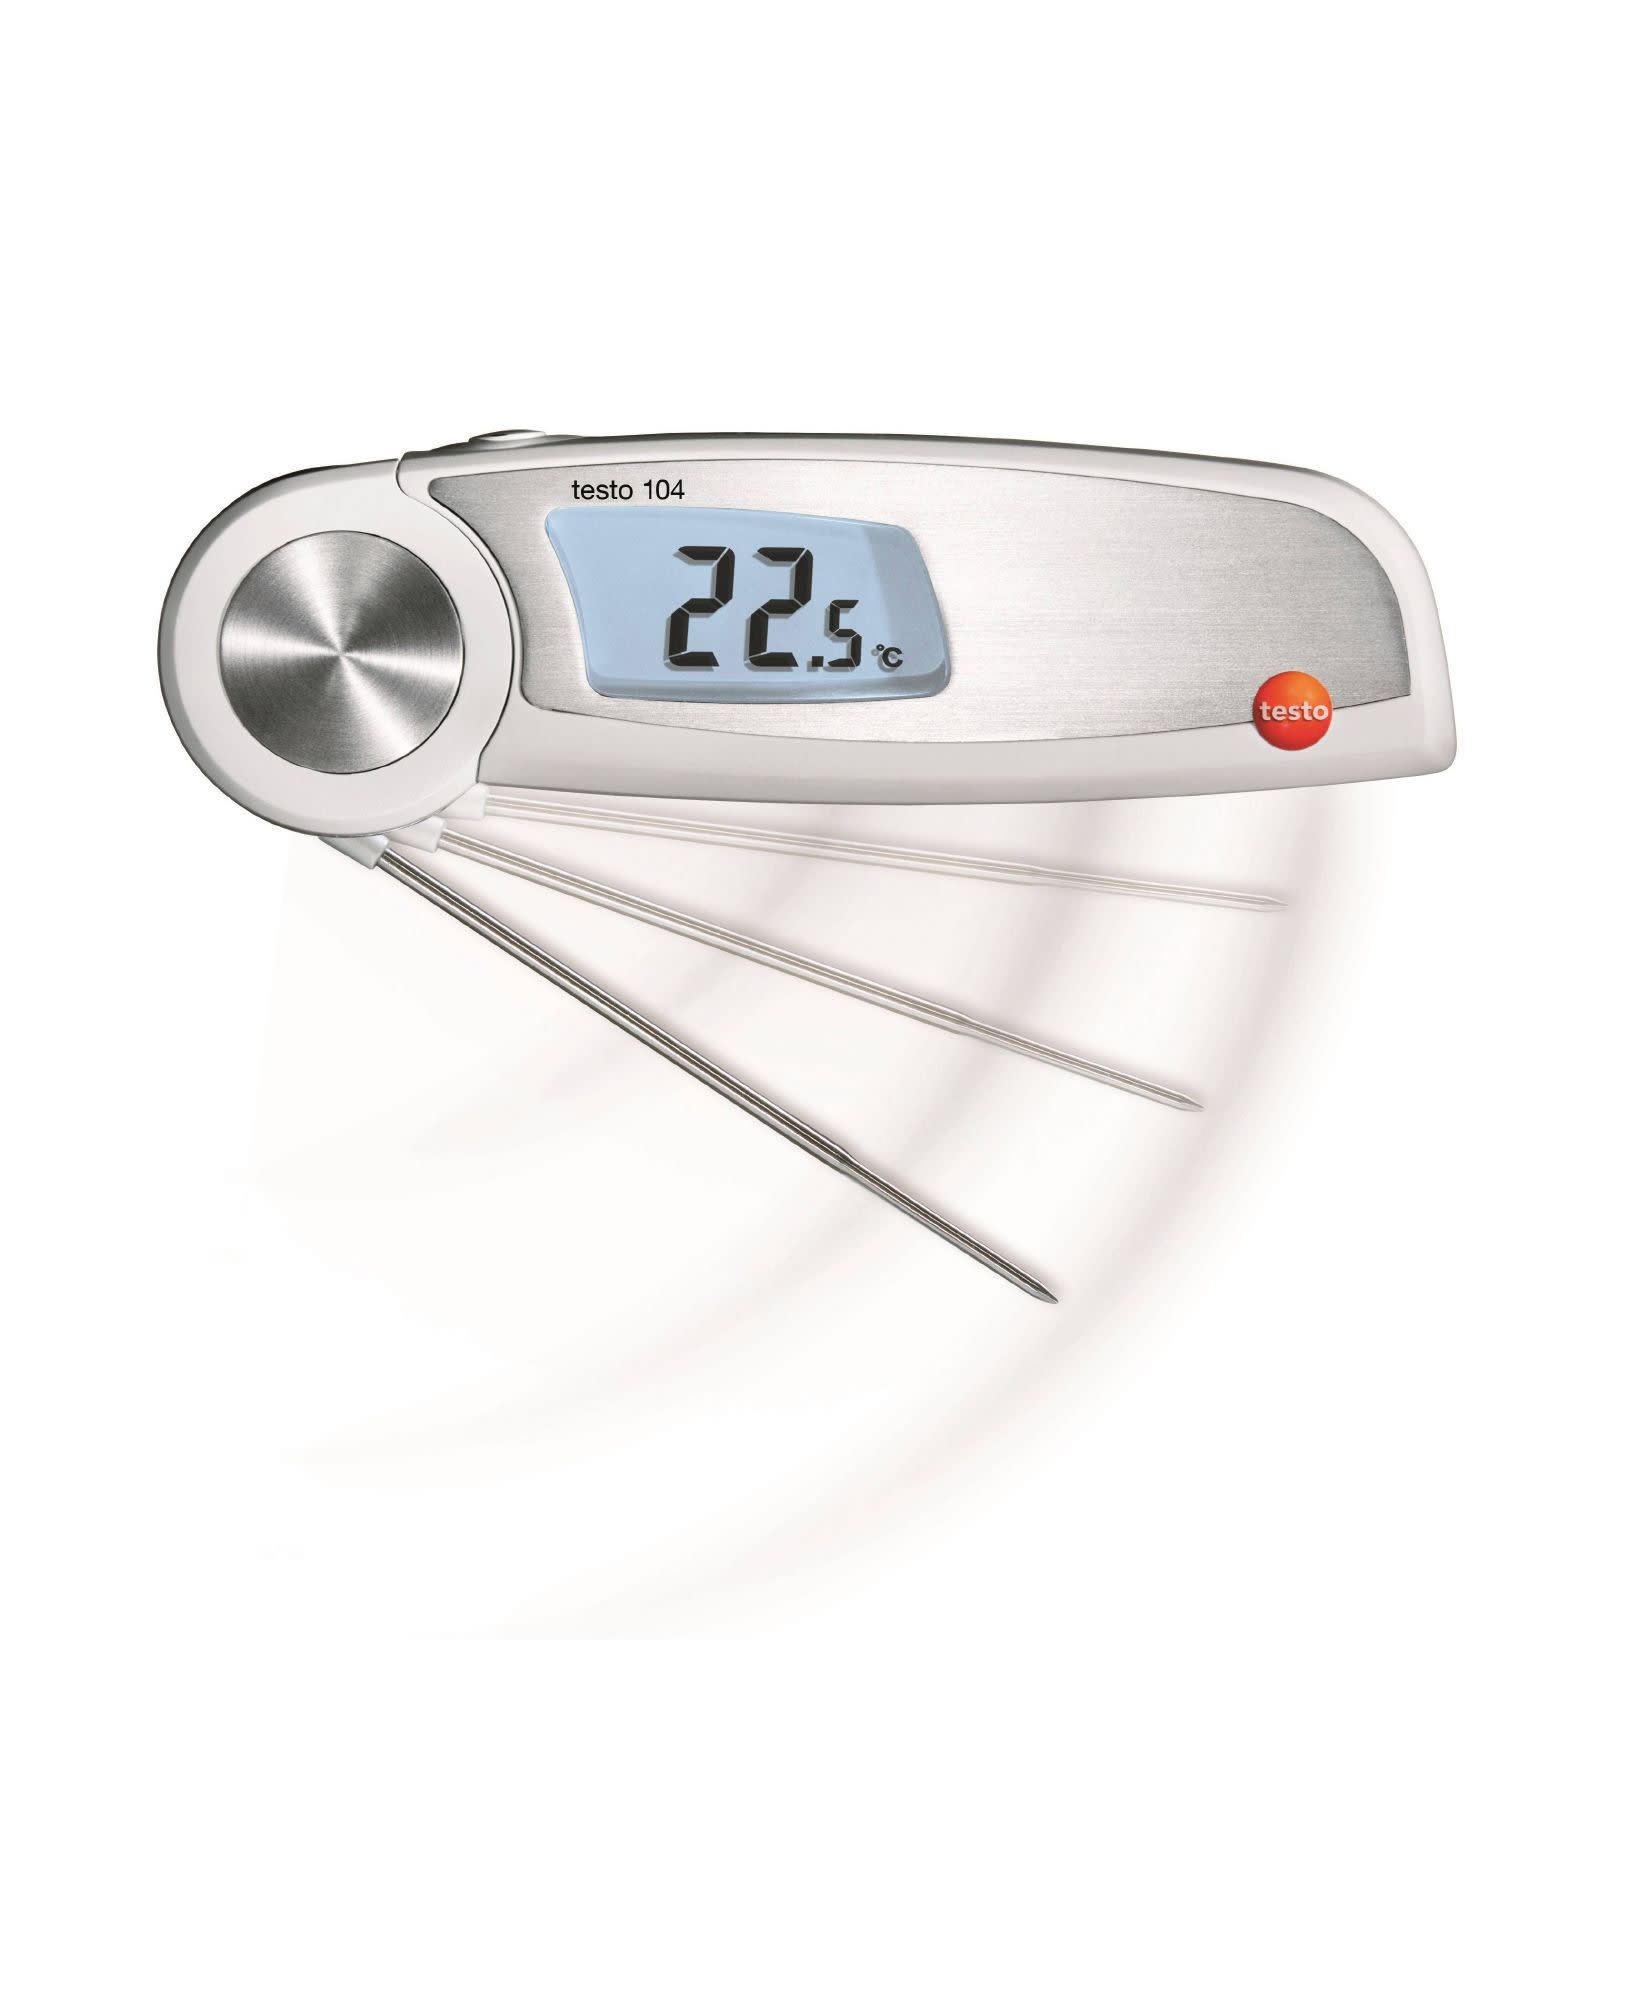 TESTO - Thermometre de penetration testo 104